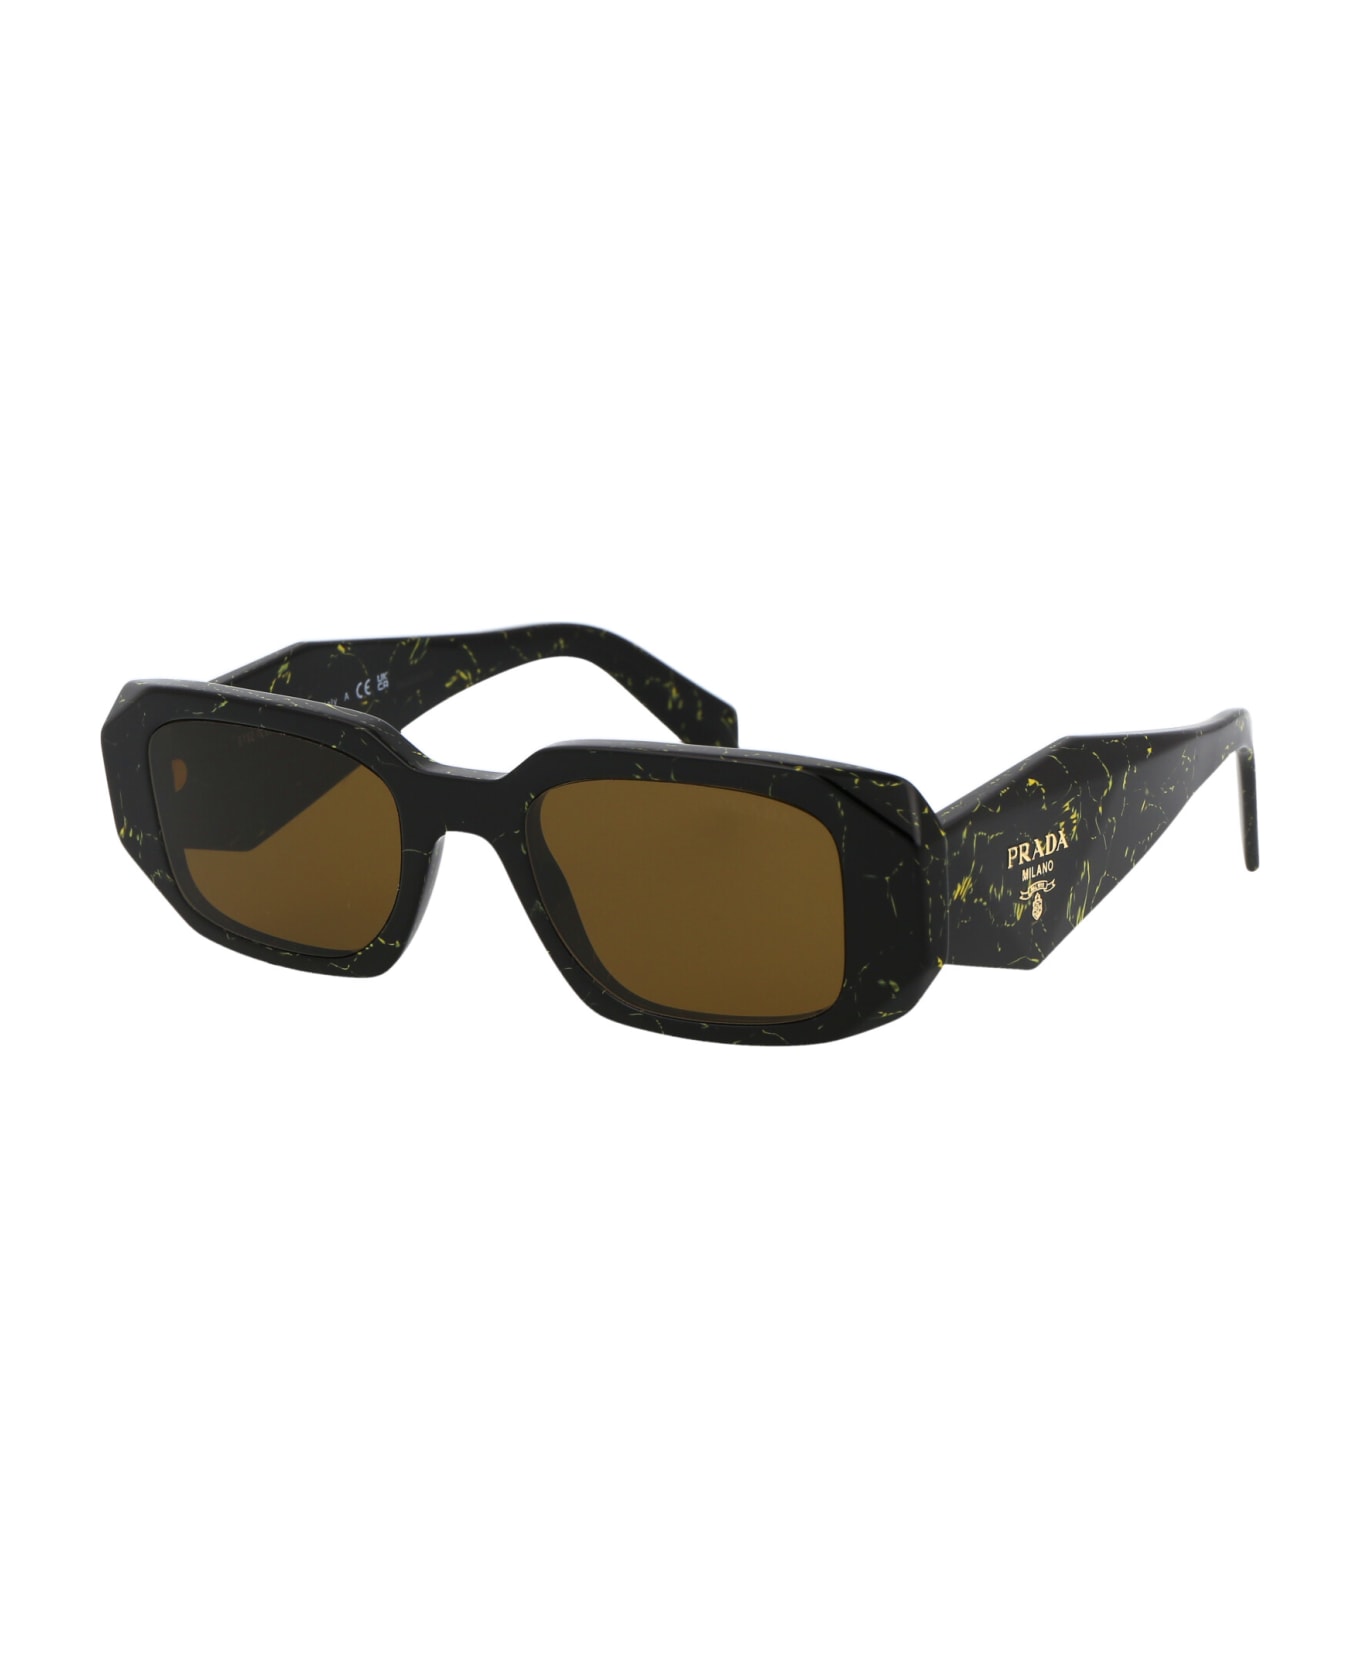 Prada Eyewear 0pr 17ws Sunglasses - 19D01T Black/Yellow Marble